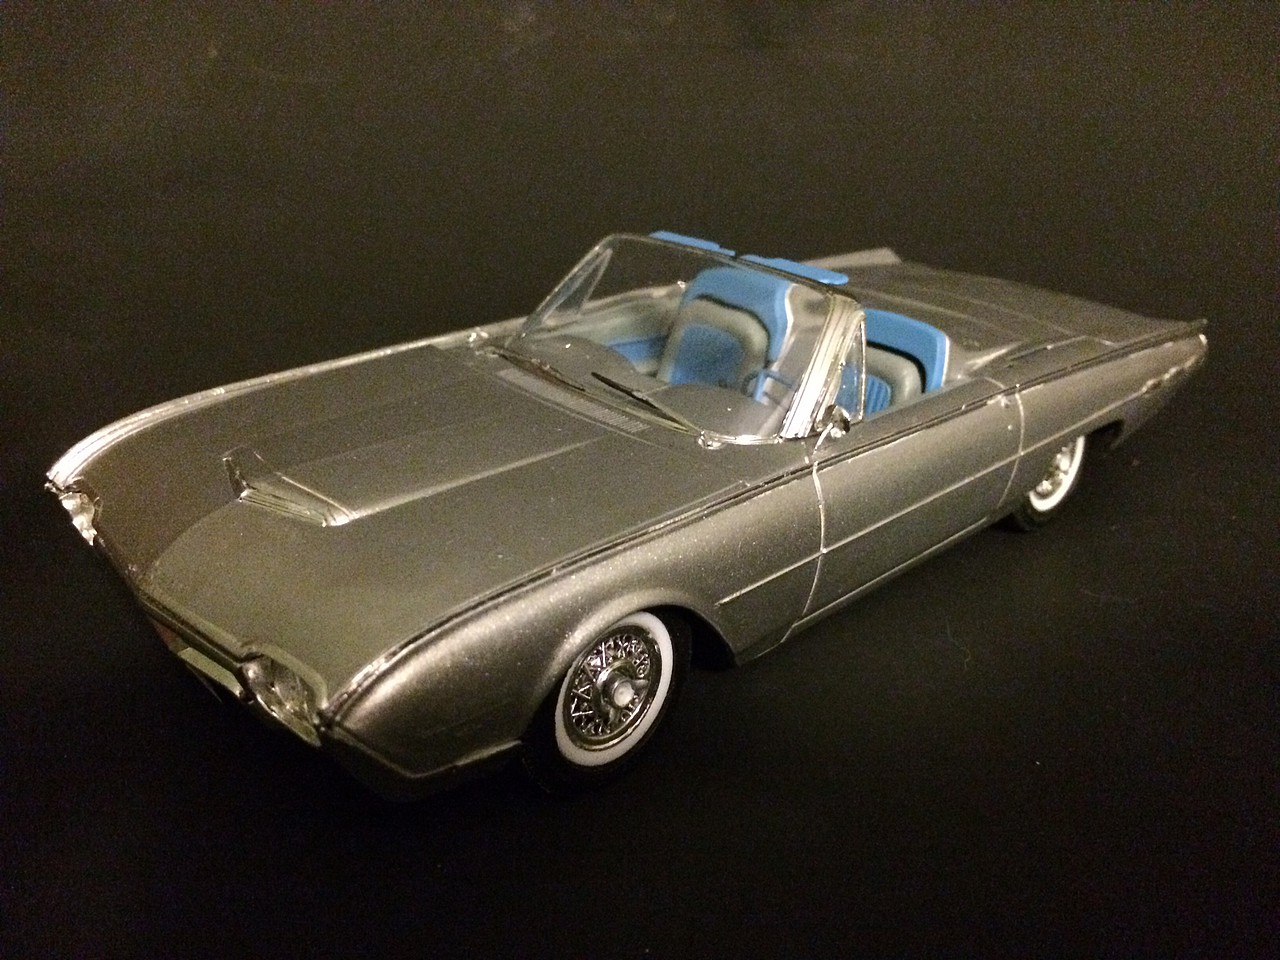 1962 ford thunderbird model car